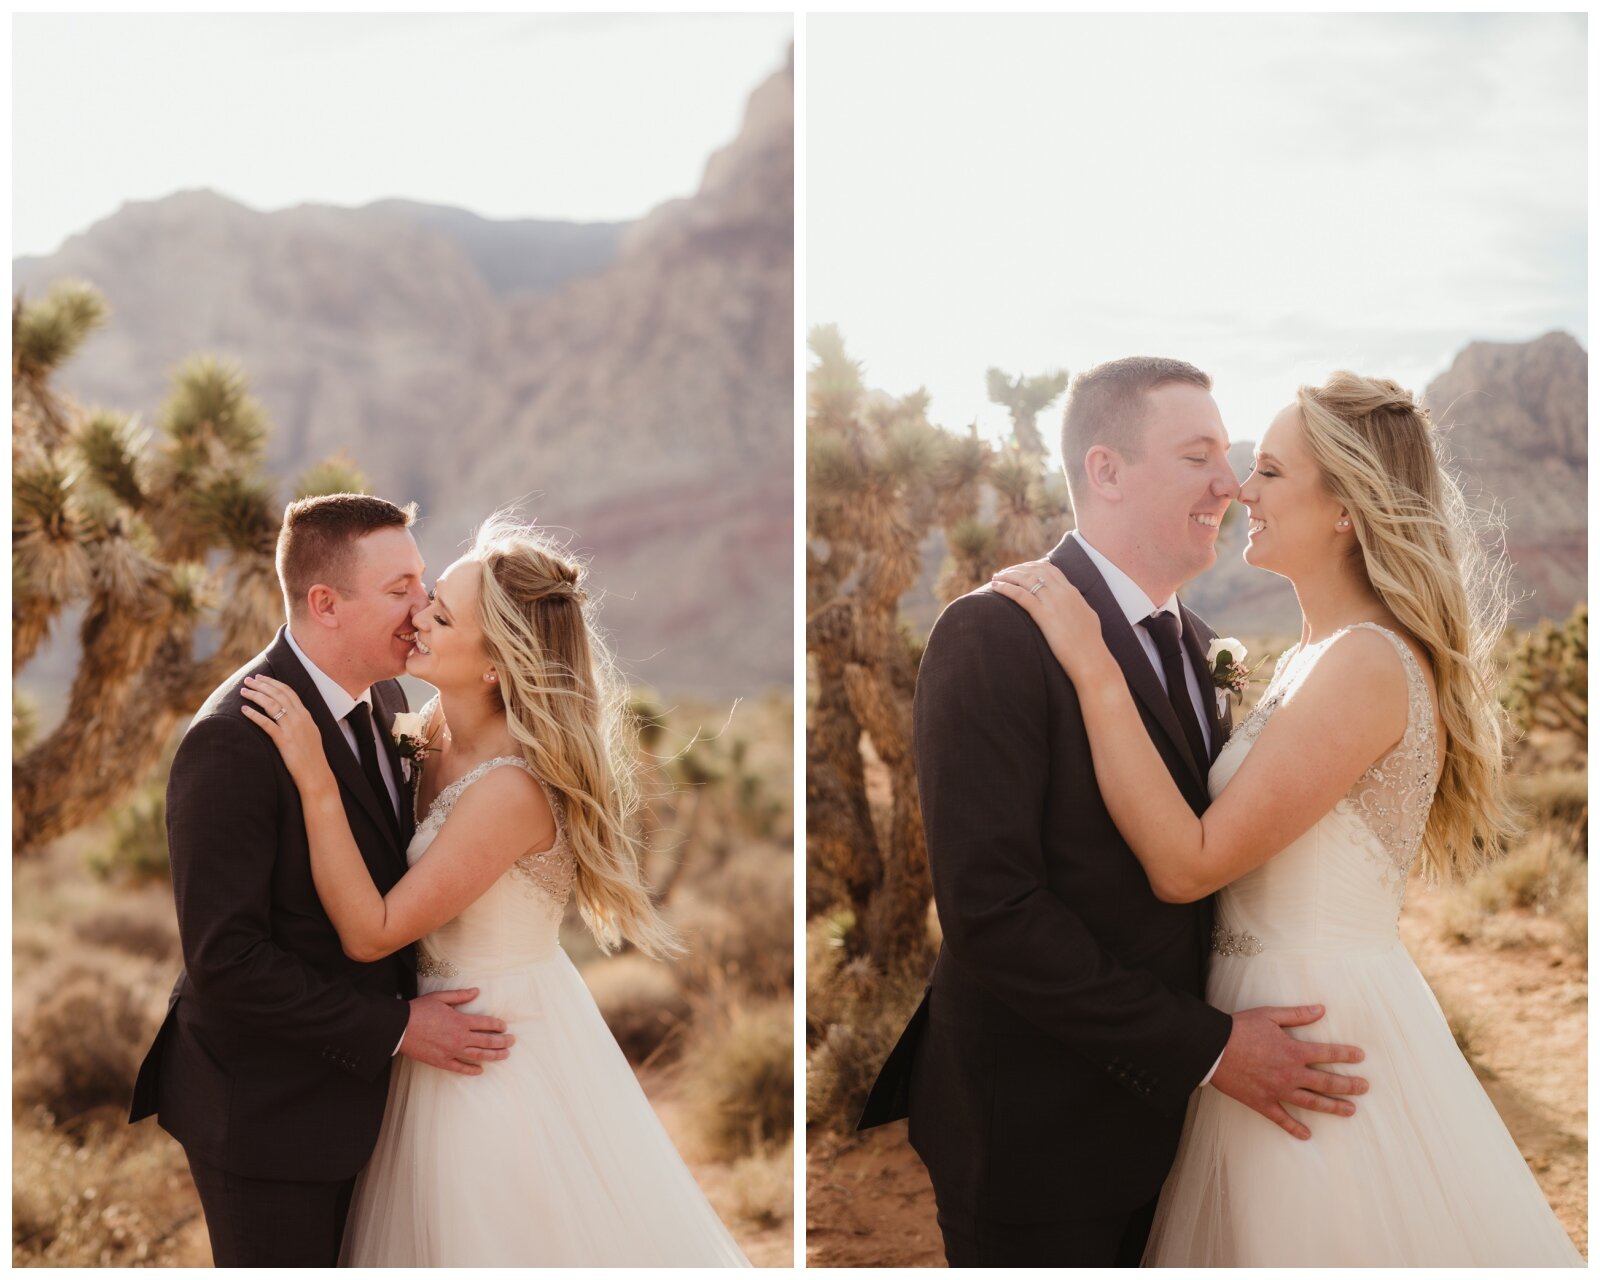 Spring Mountain Ranch Wedding Photos - Amber Garrett Photography - 030.jpg